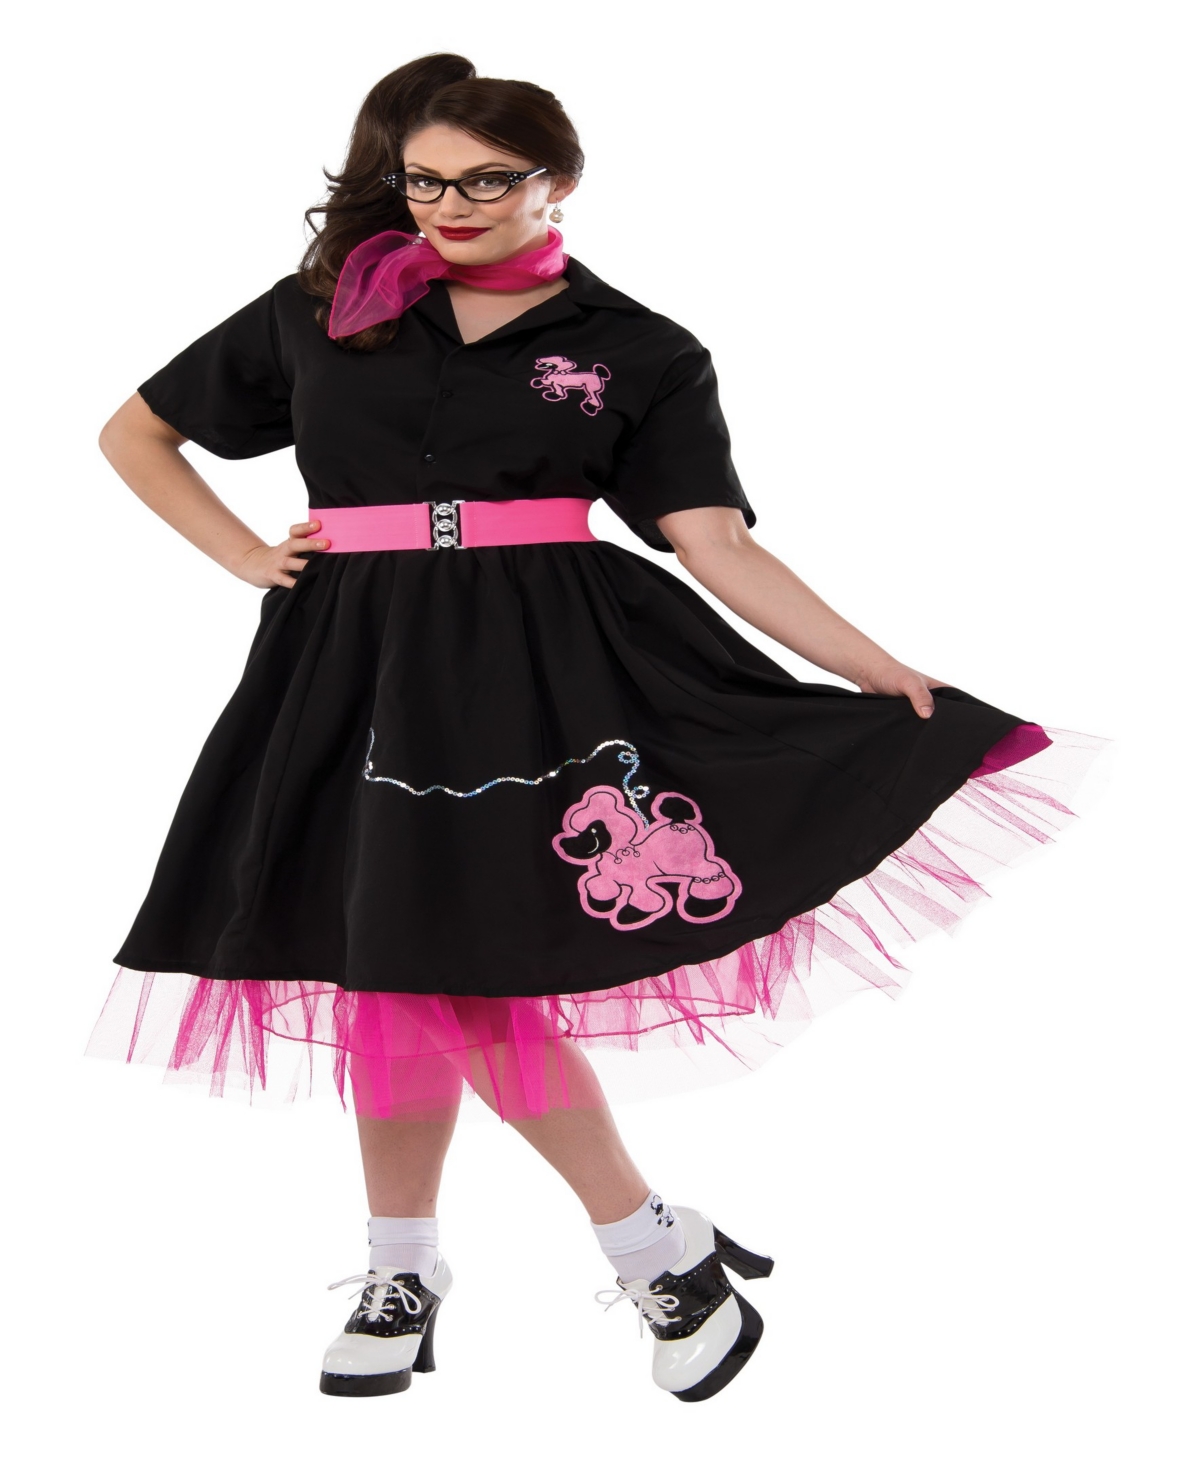 BuySeason Women's Complete Poodle Skirt Costume - Pink